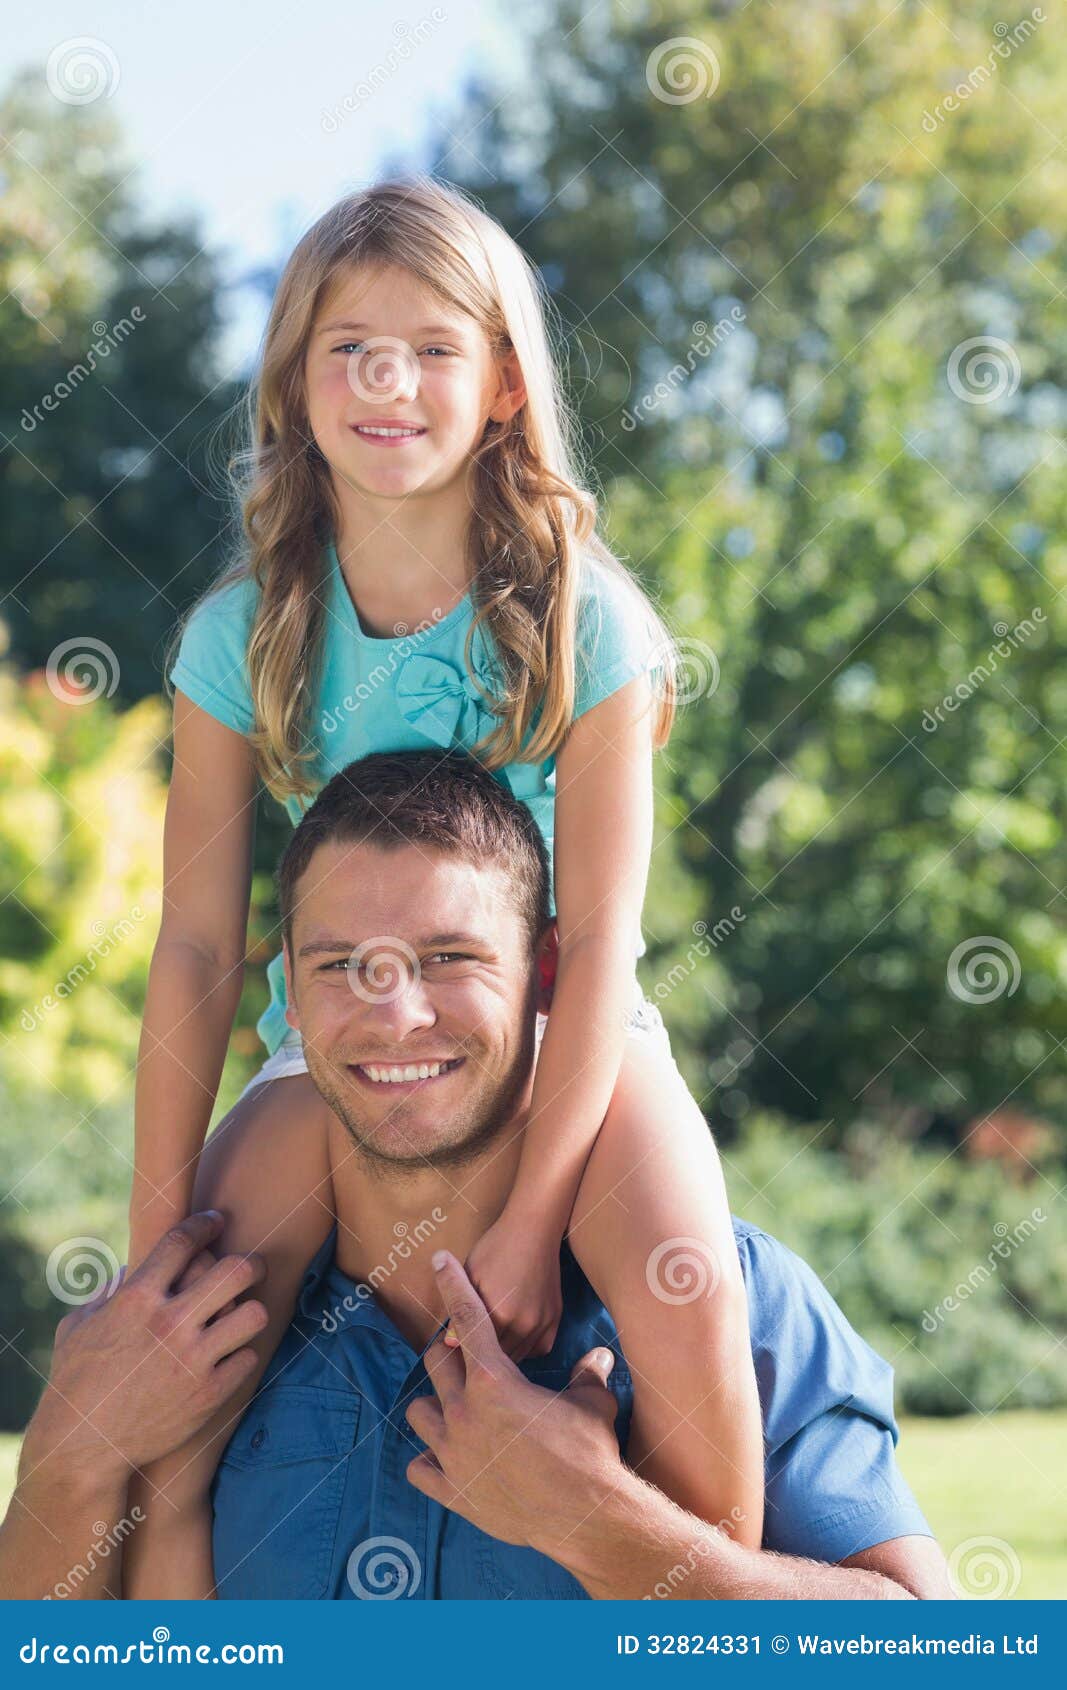 Dad young daughter. Дочь на плечах у отца. Девочка на руках отца. Девочка сидит на плечах. Девочка на плечах у папы.